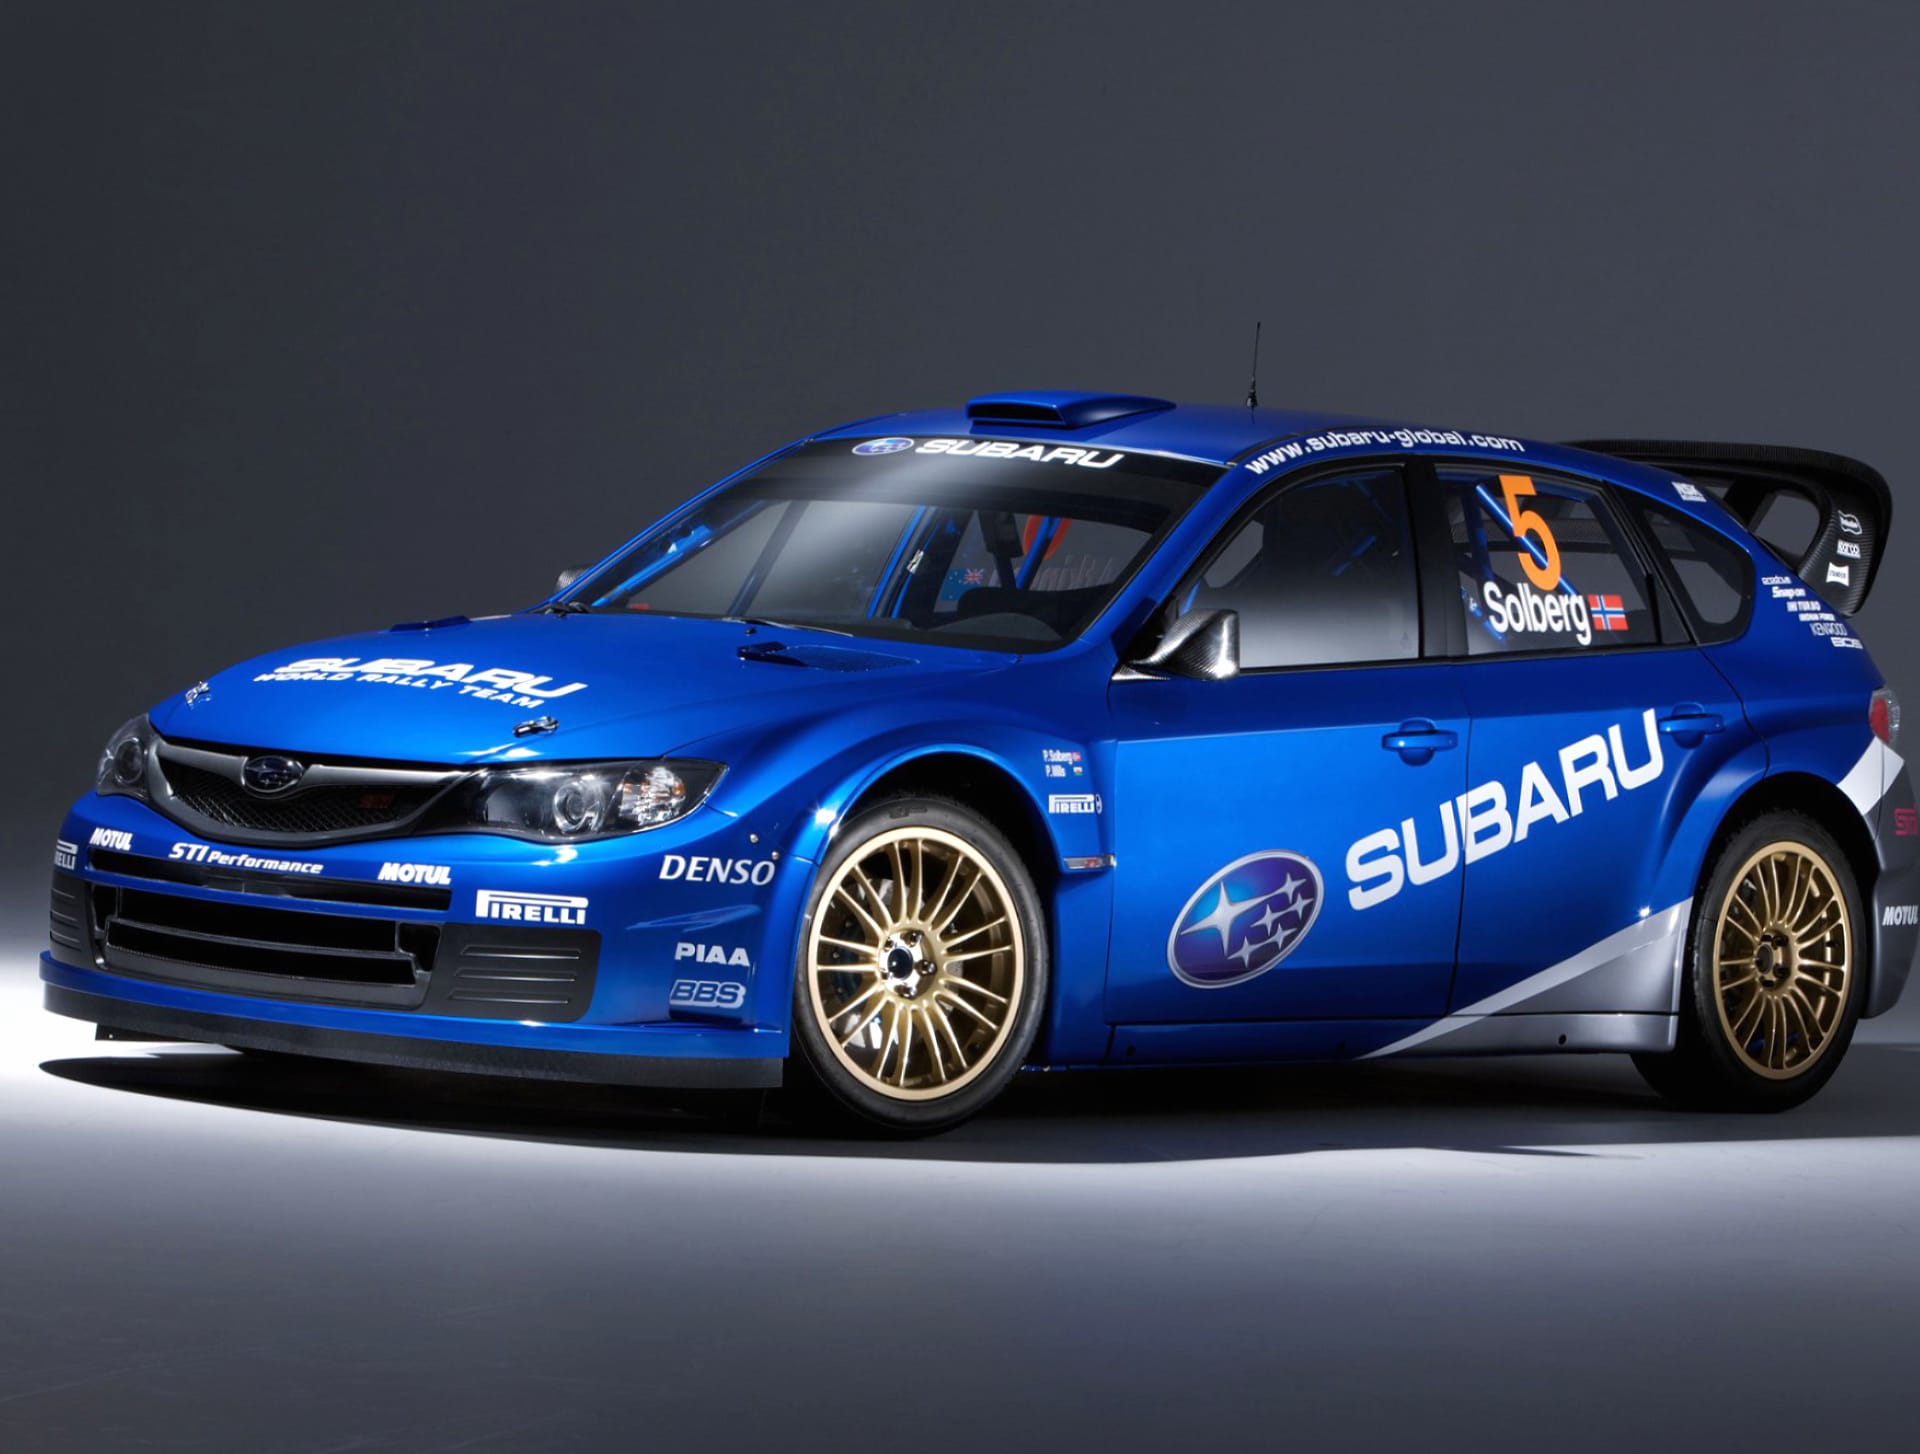 Subaru Impreza WRC at 1600 x 1200 size wallpapers HD quality